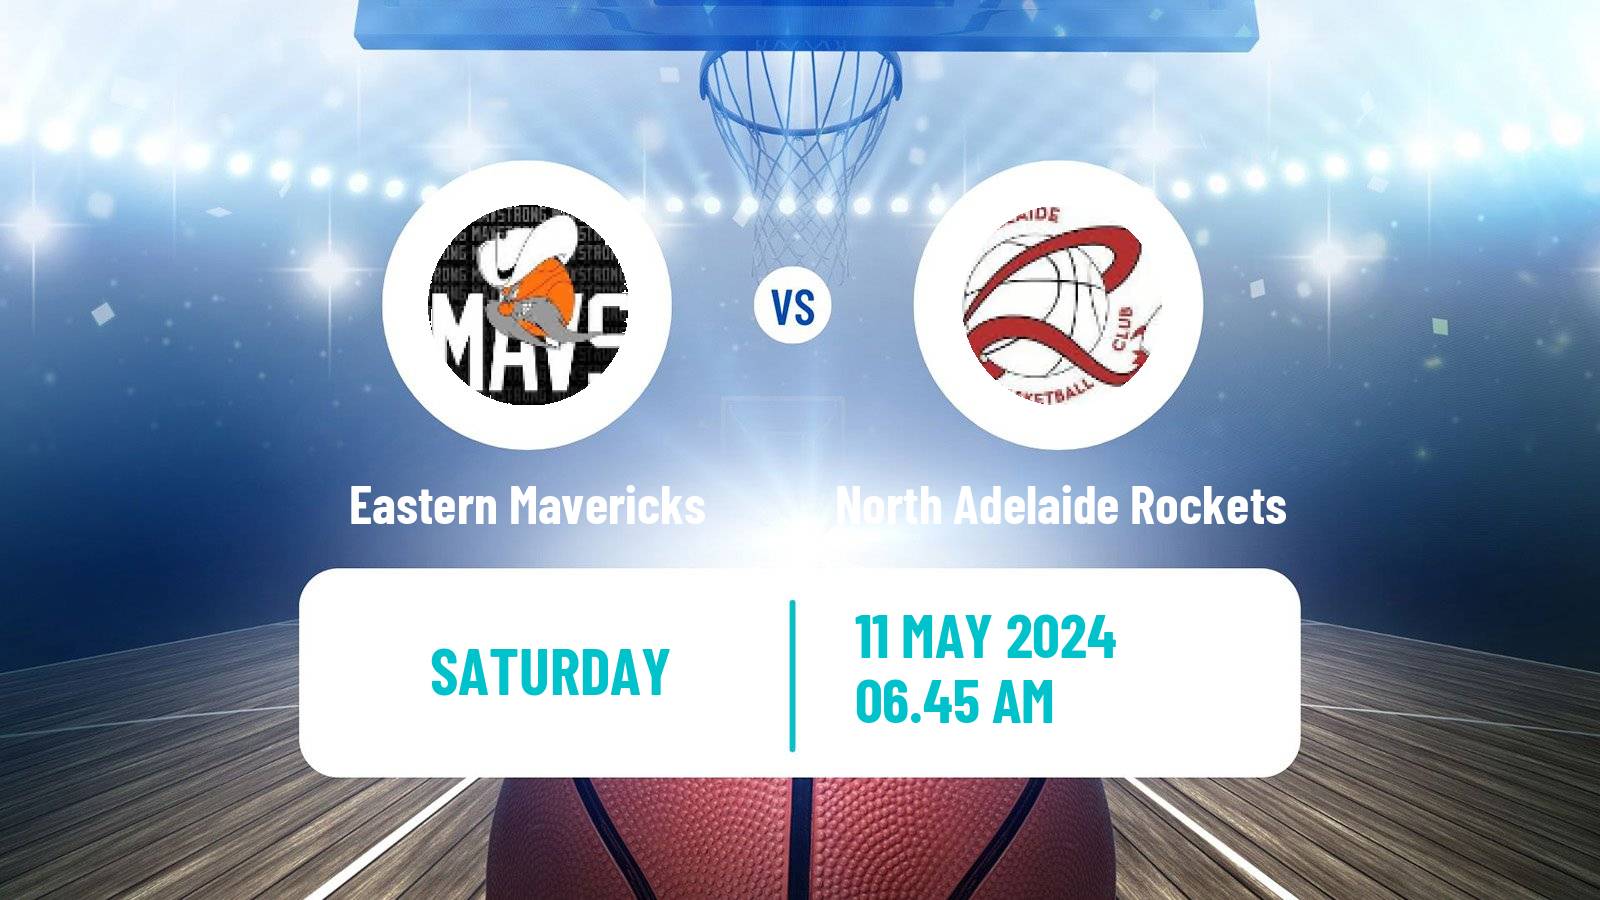 Basketball Australian NBL1 Central Eastern Mavericks - North Adelaide Rockets